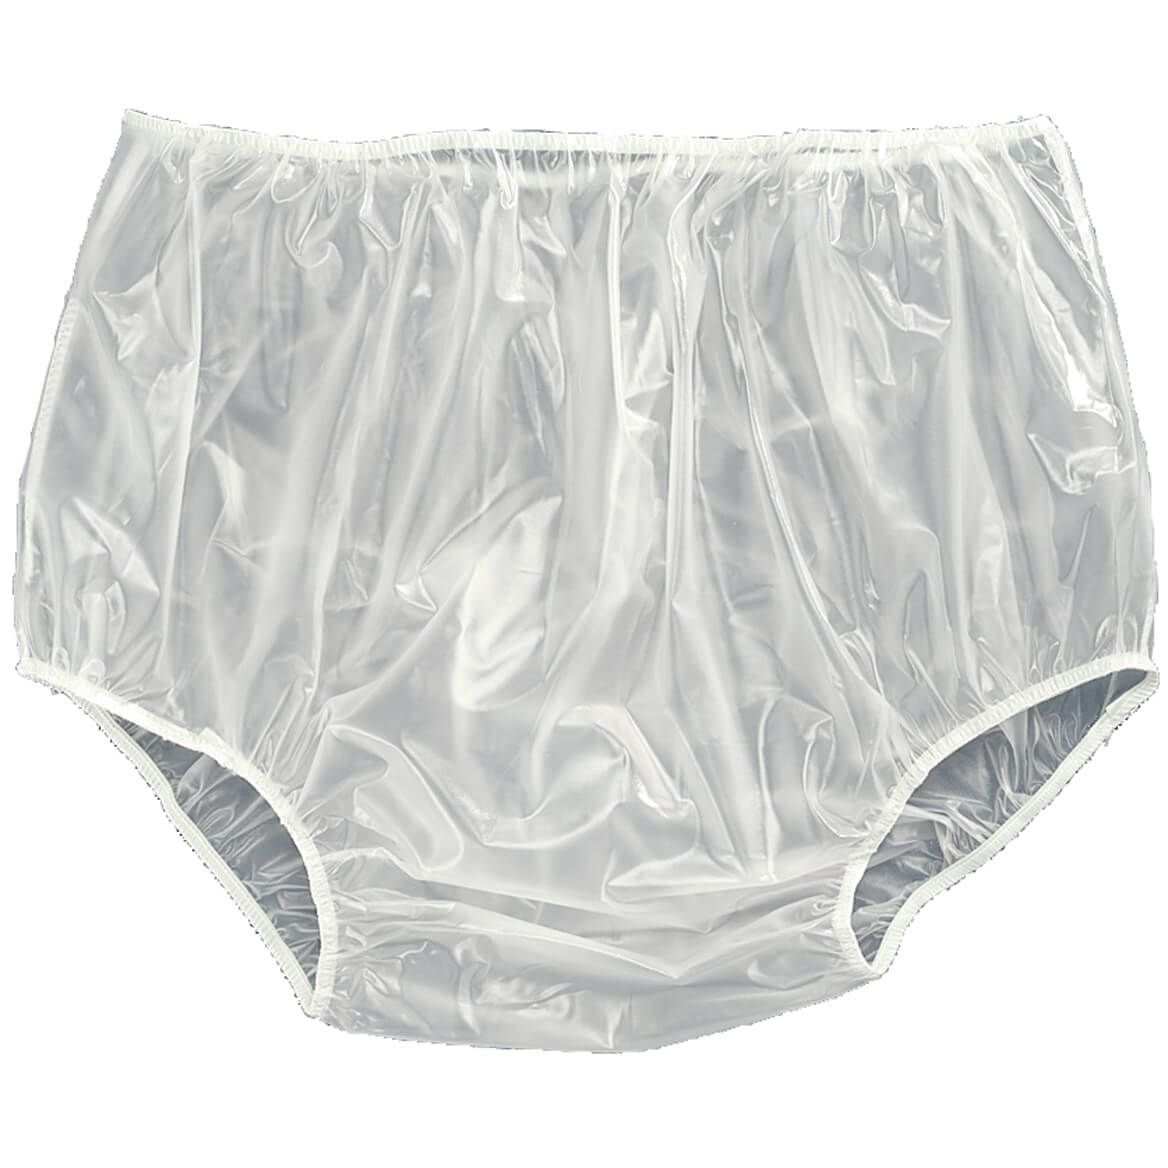  9 Pcs Waterproof Incontinence Underpants Plastic Pull